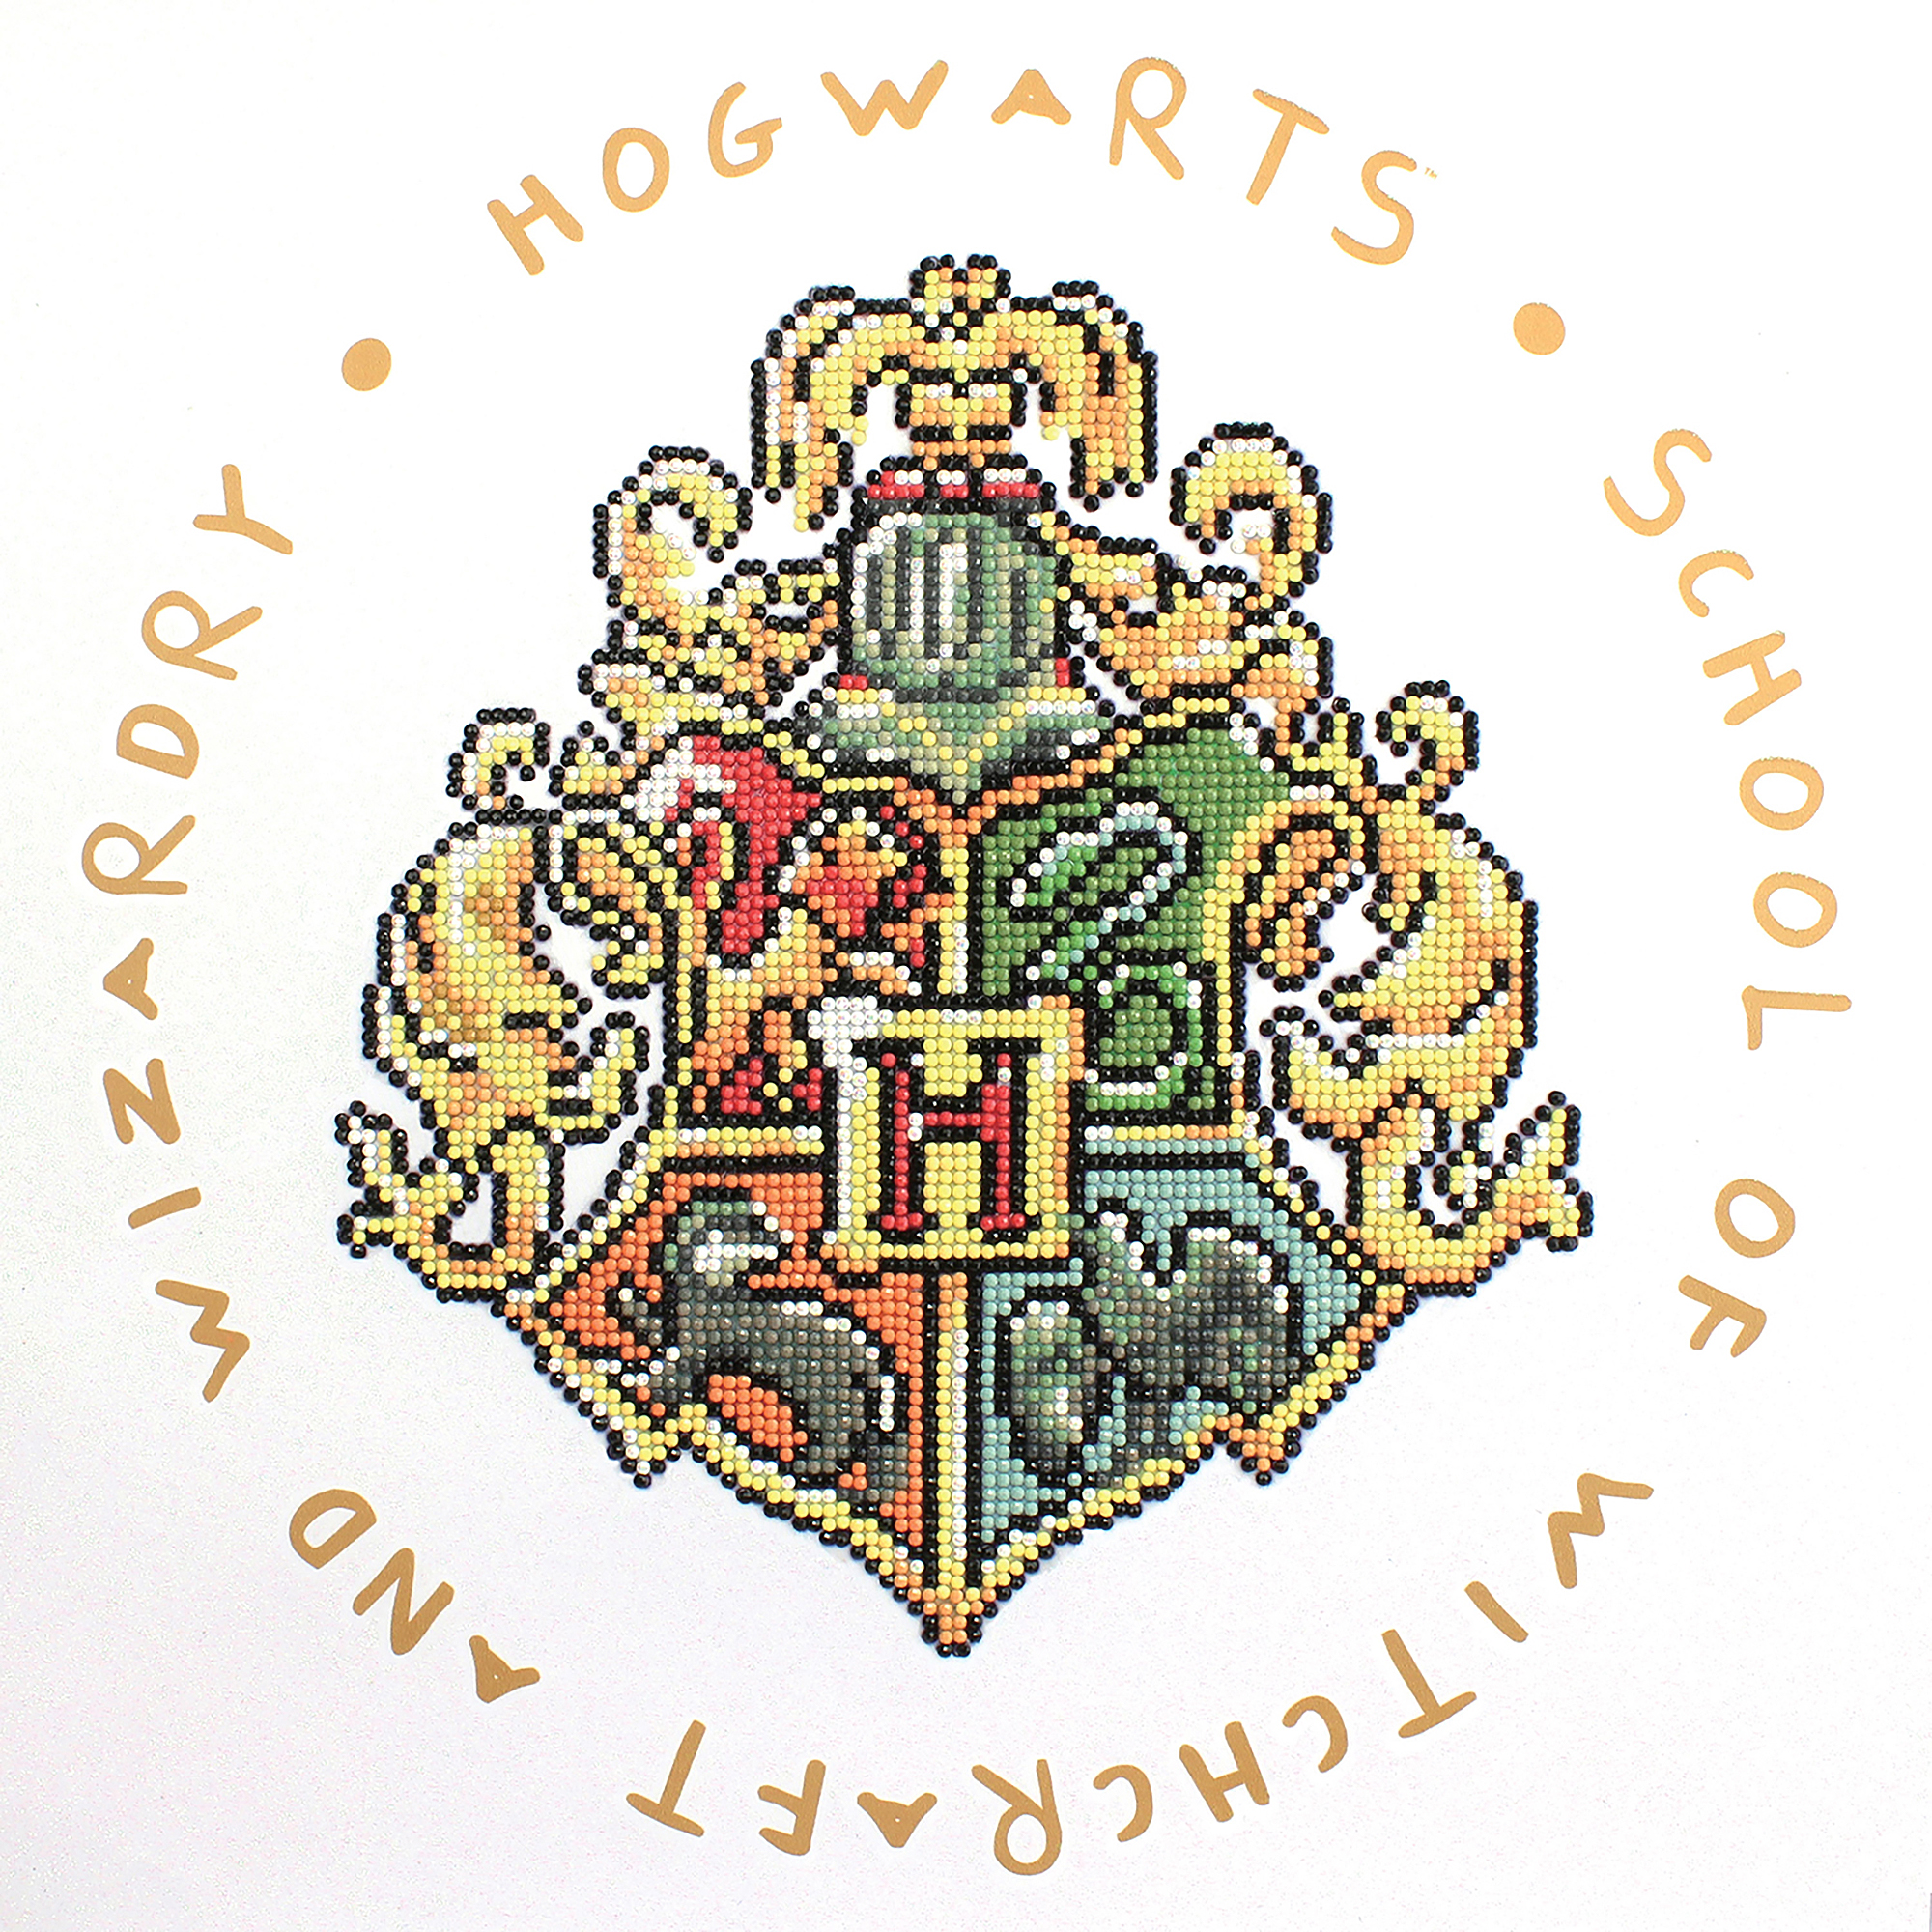 Harry Potter Diamond Art Painting Set From 12.00 GBP